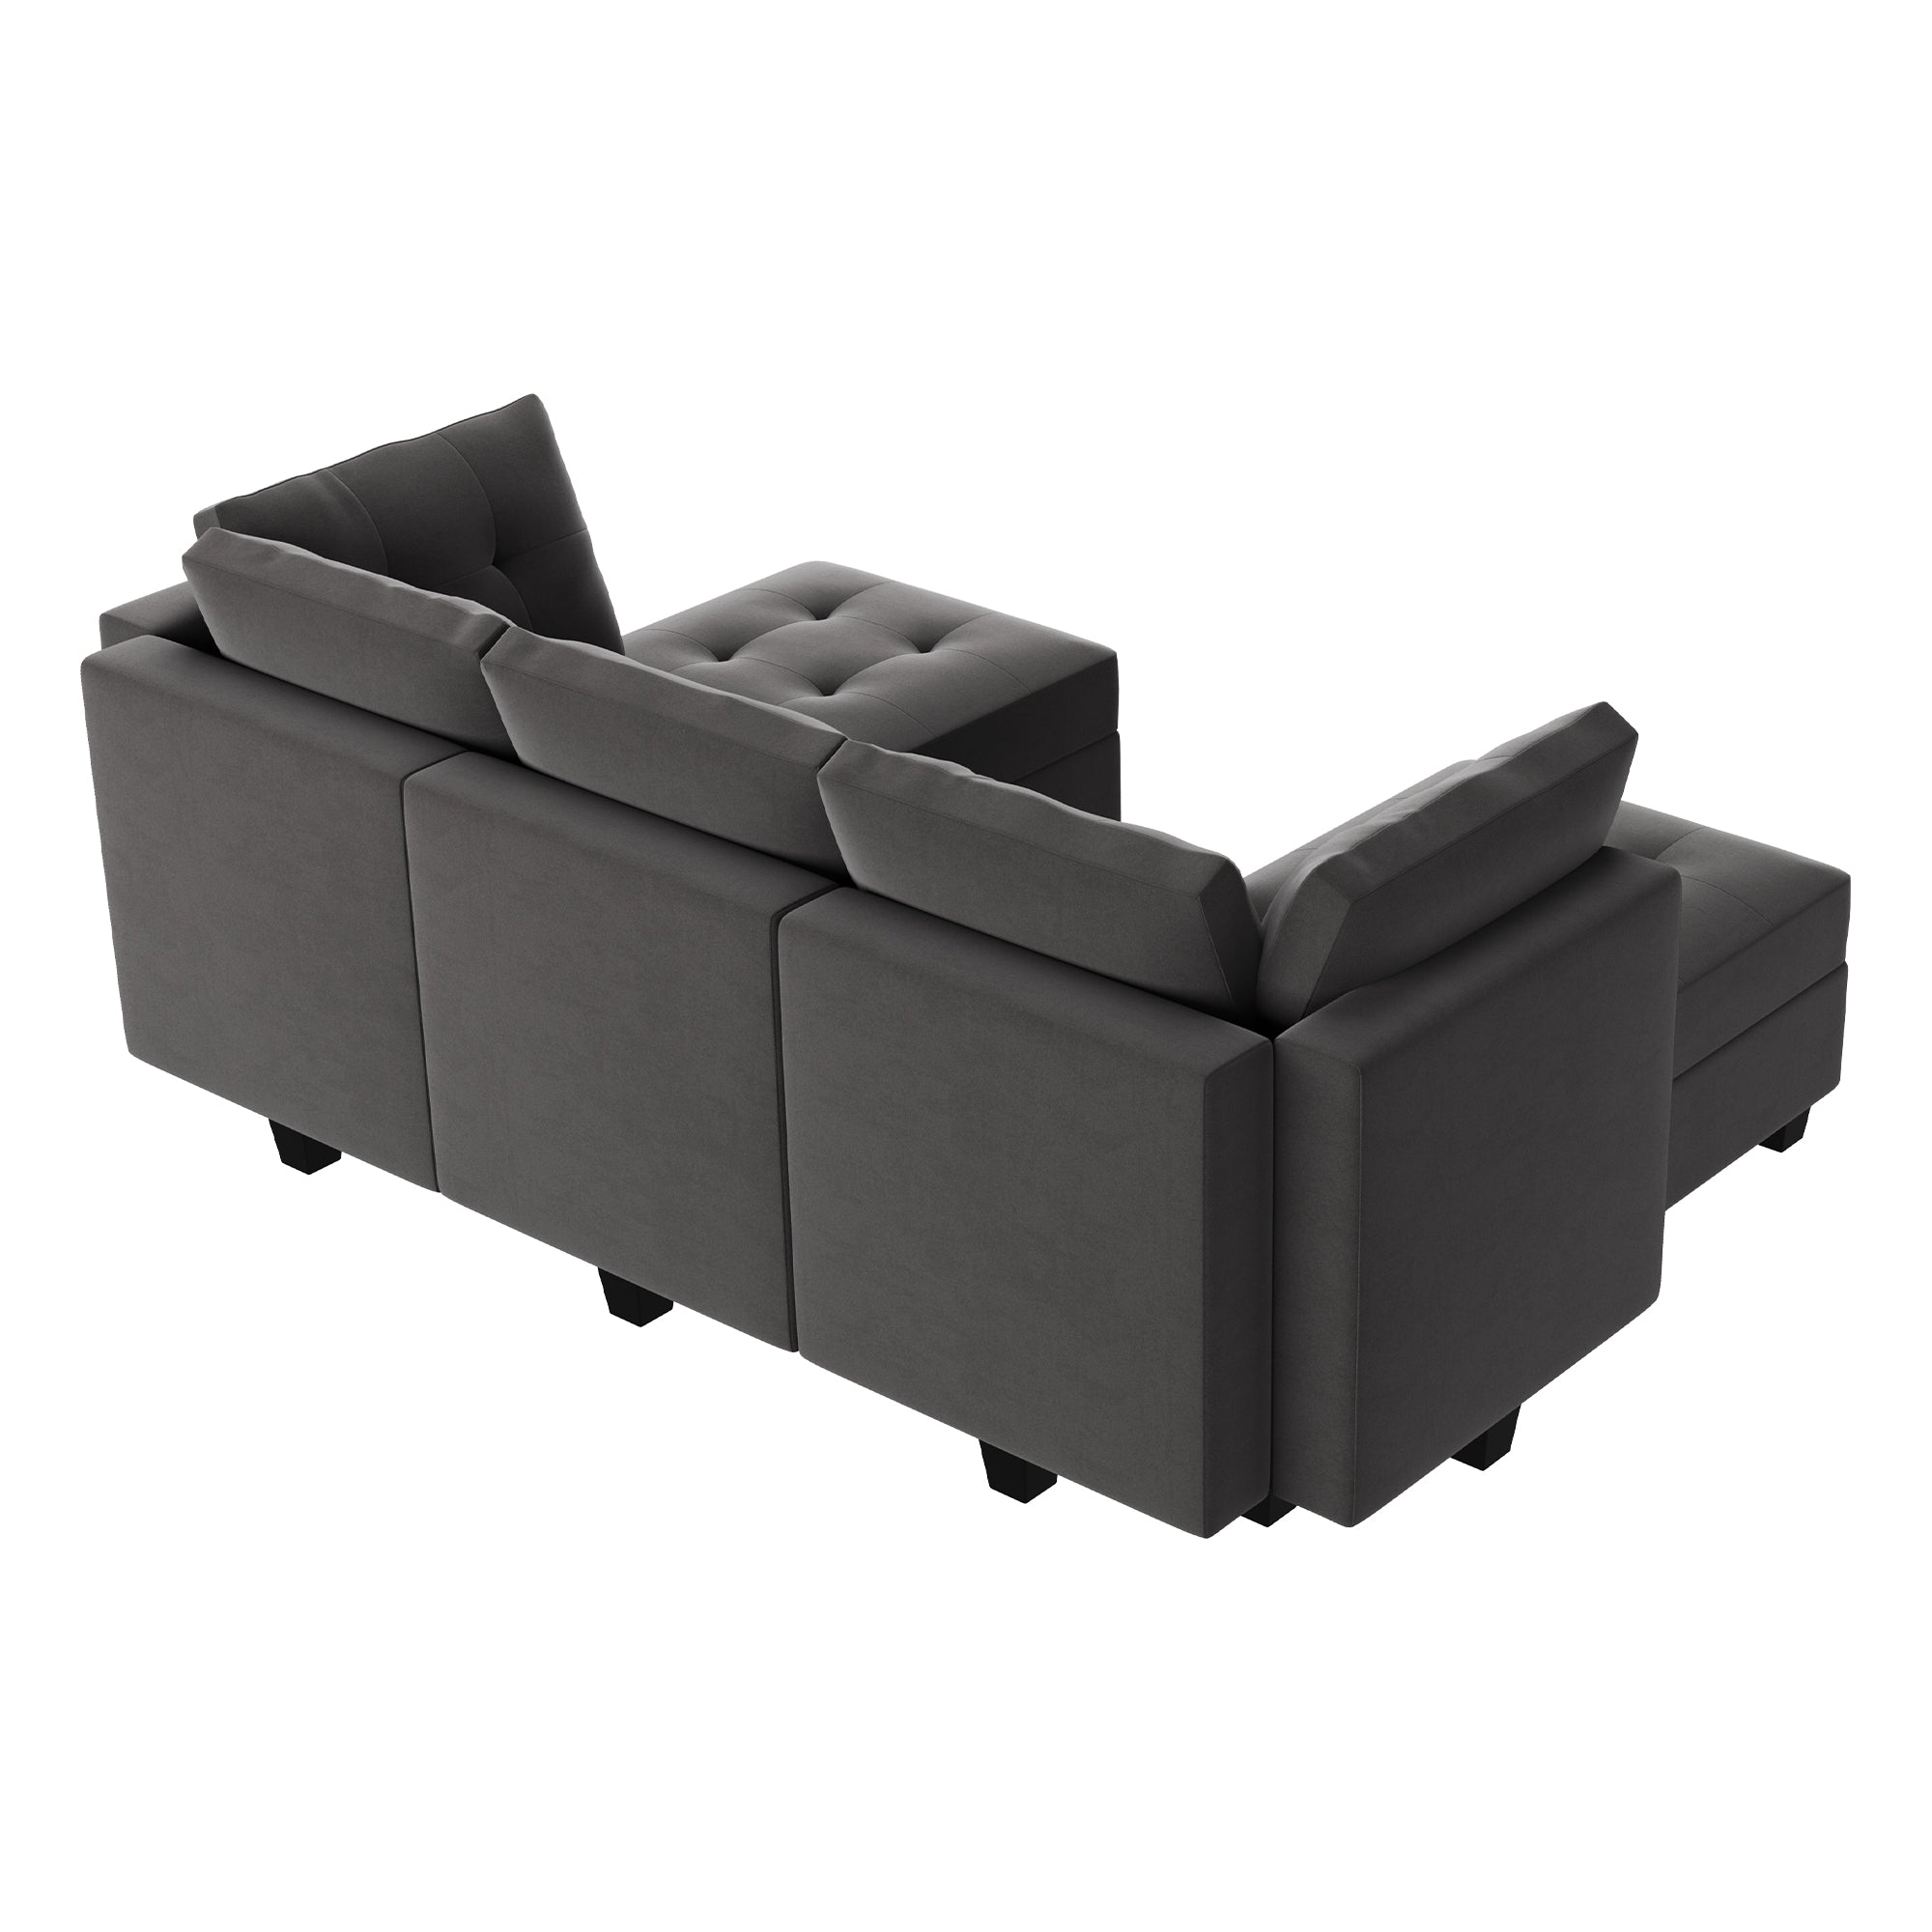 HONBAY Velvet Tufted 3-Seat U-Shaped Modular Storage Sofa with 2 Convertible Ottomans